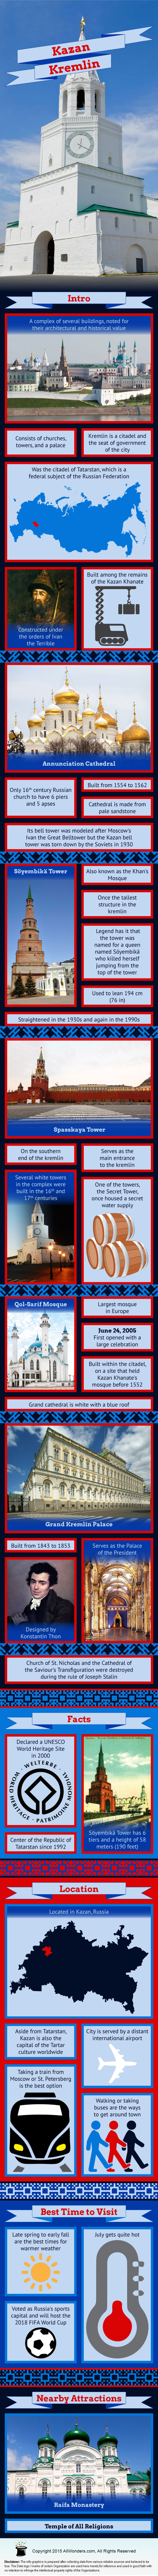 Kazan Kremlin, Russia - Facts & Infographic